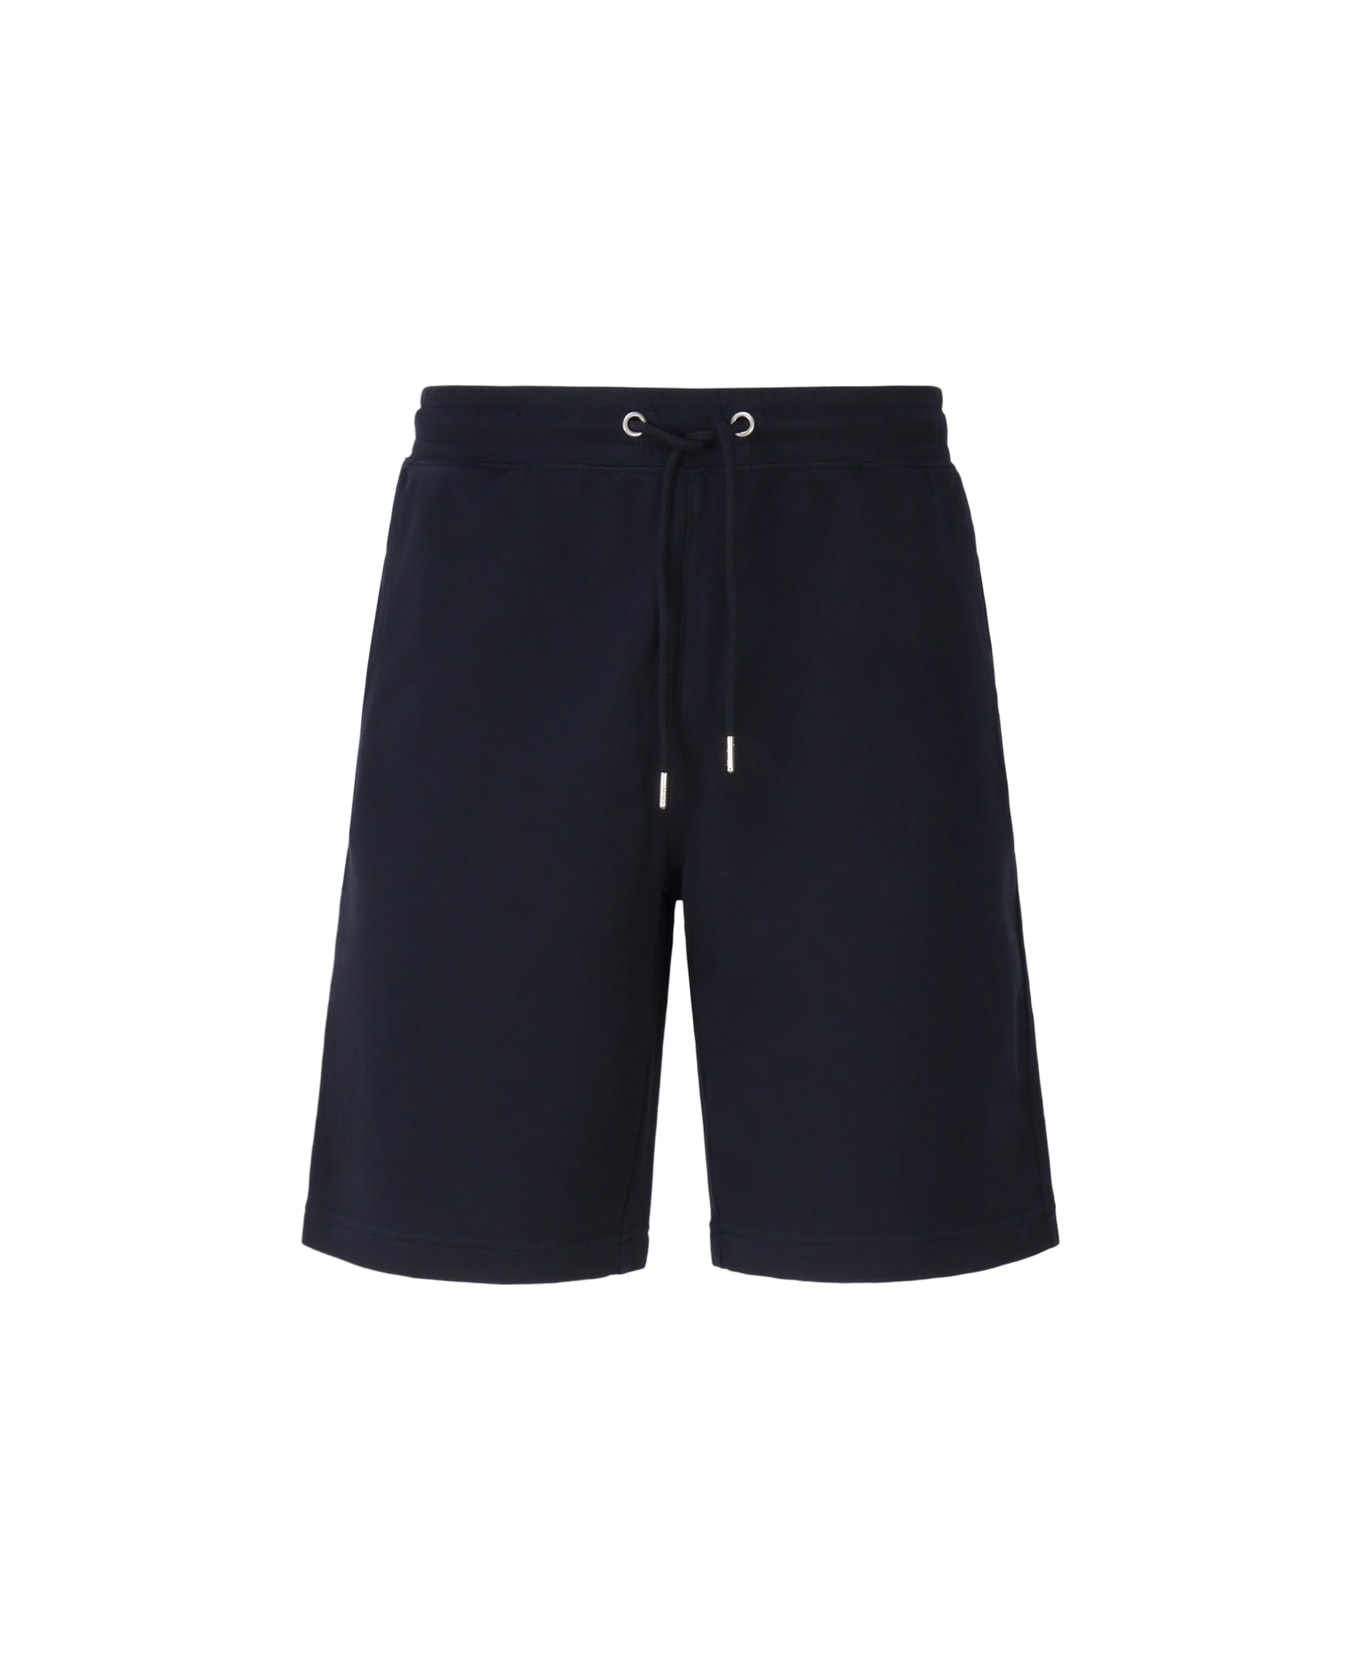 Sun 68 Cotton Blended Shorts - Navy blue